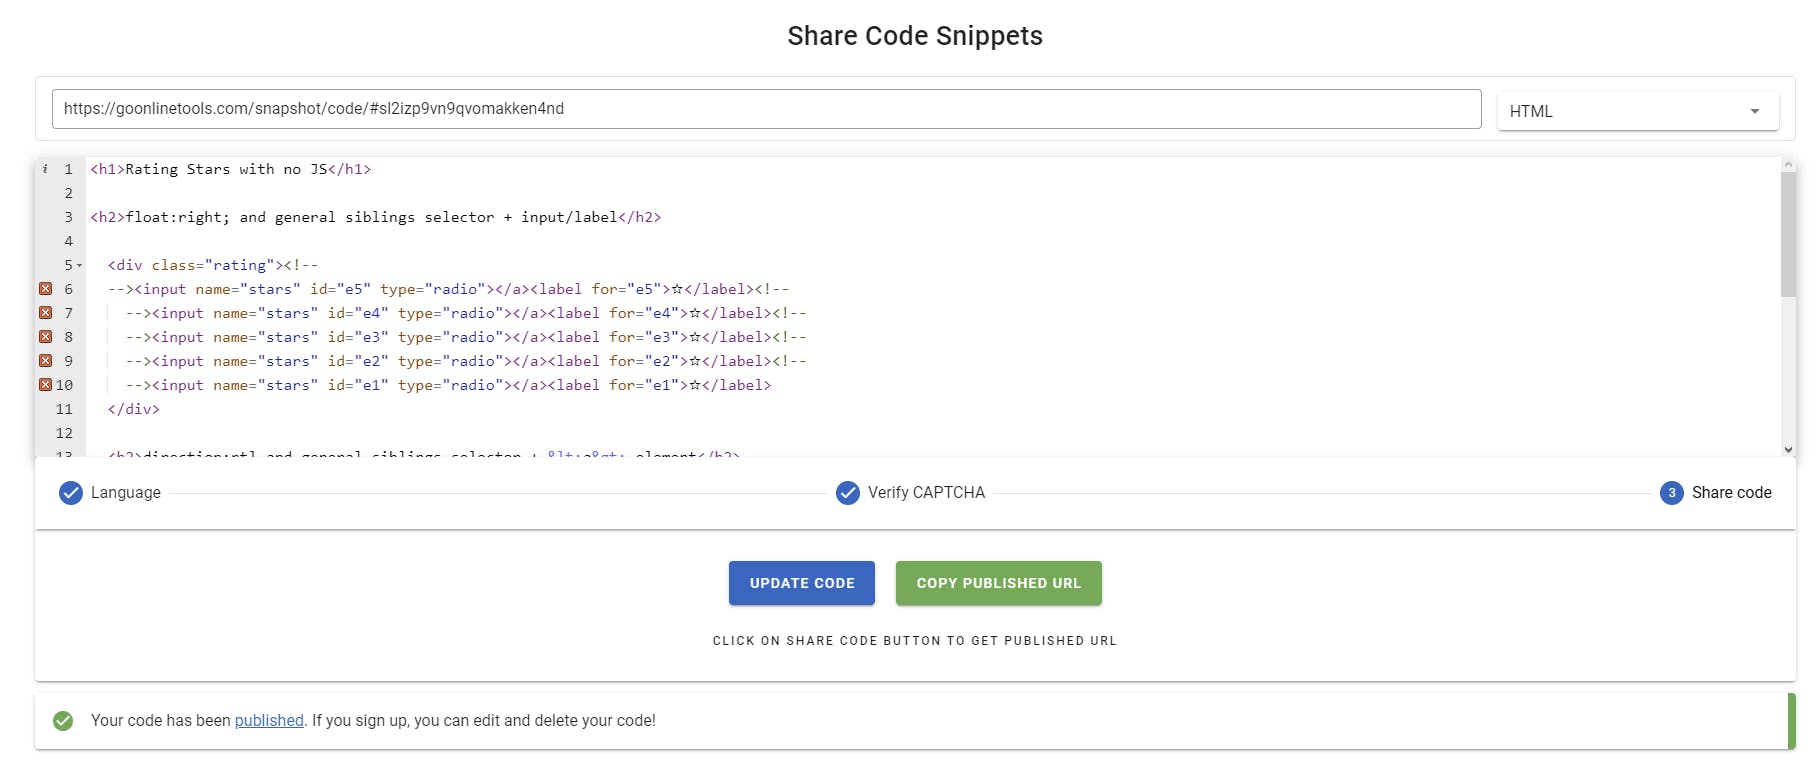 code sharing tool is simple